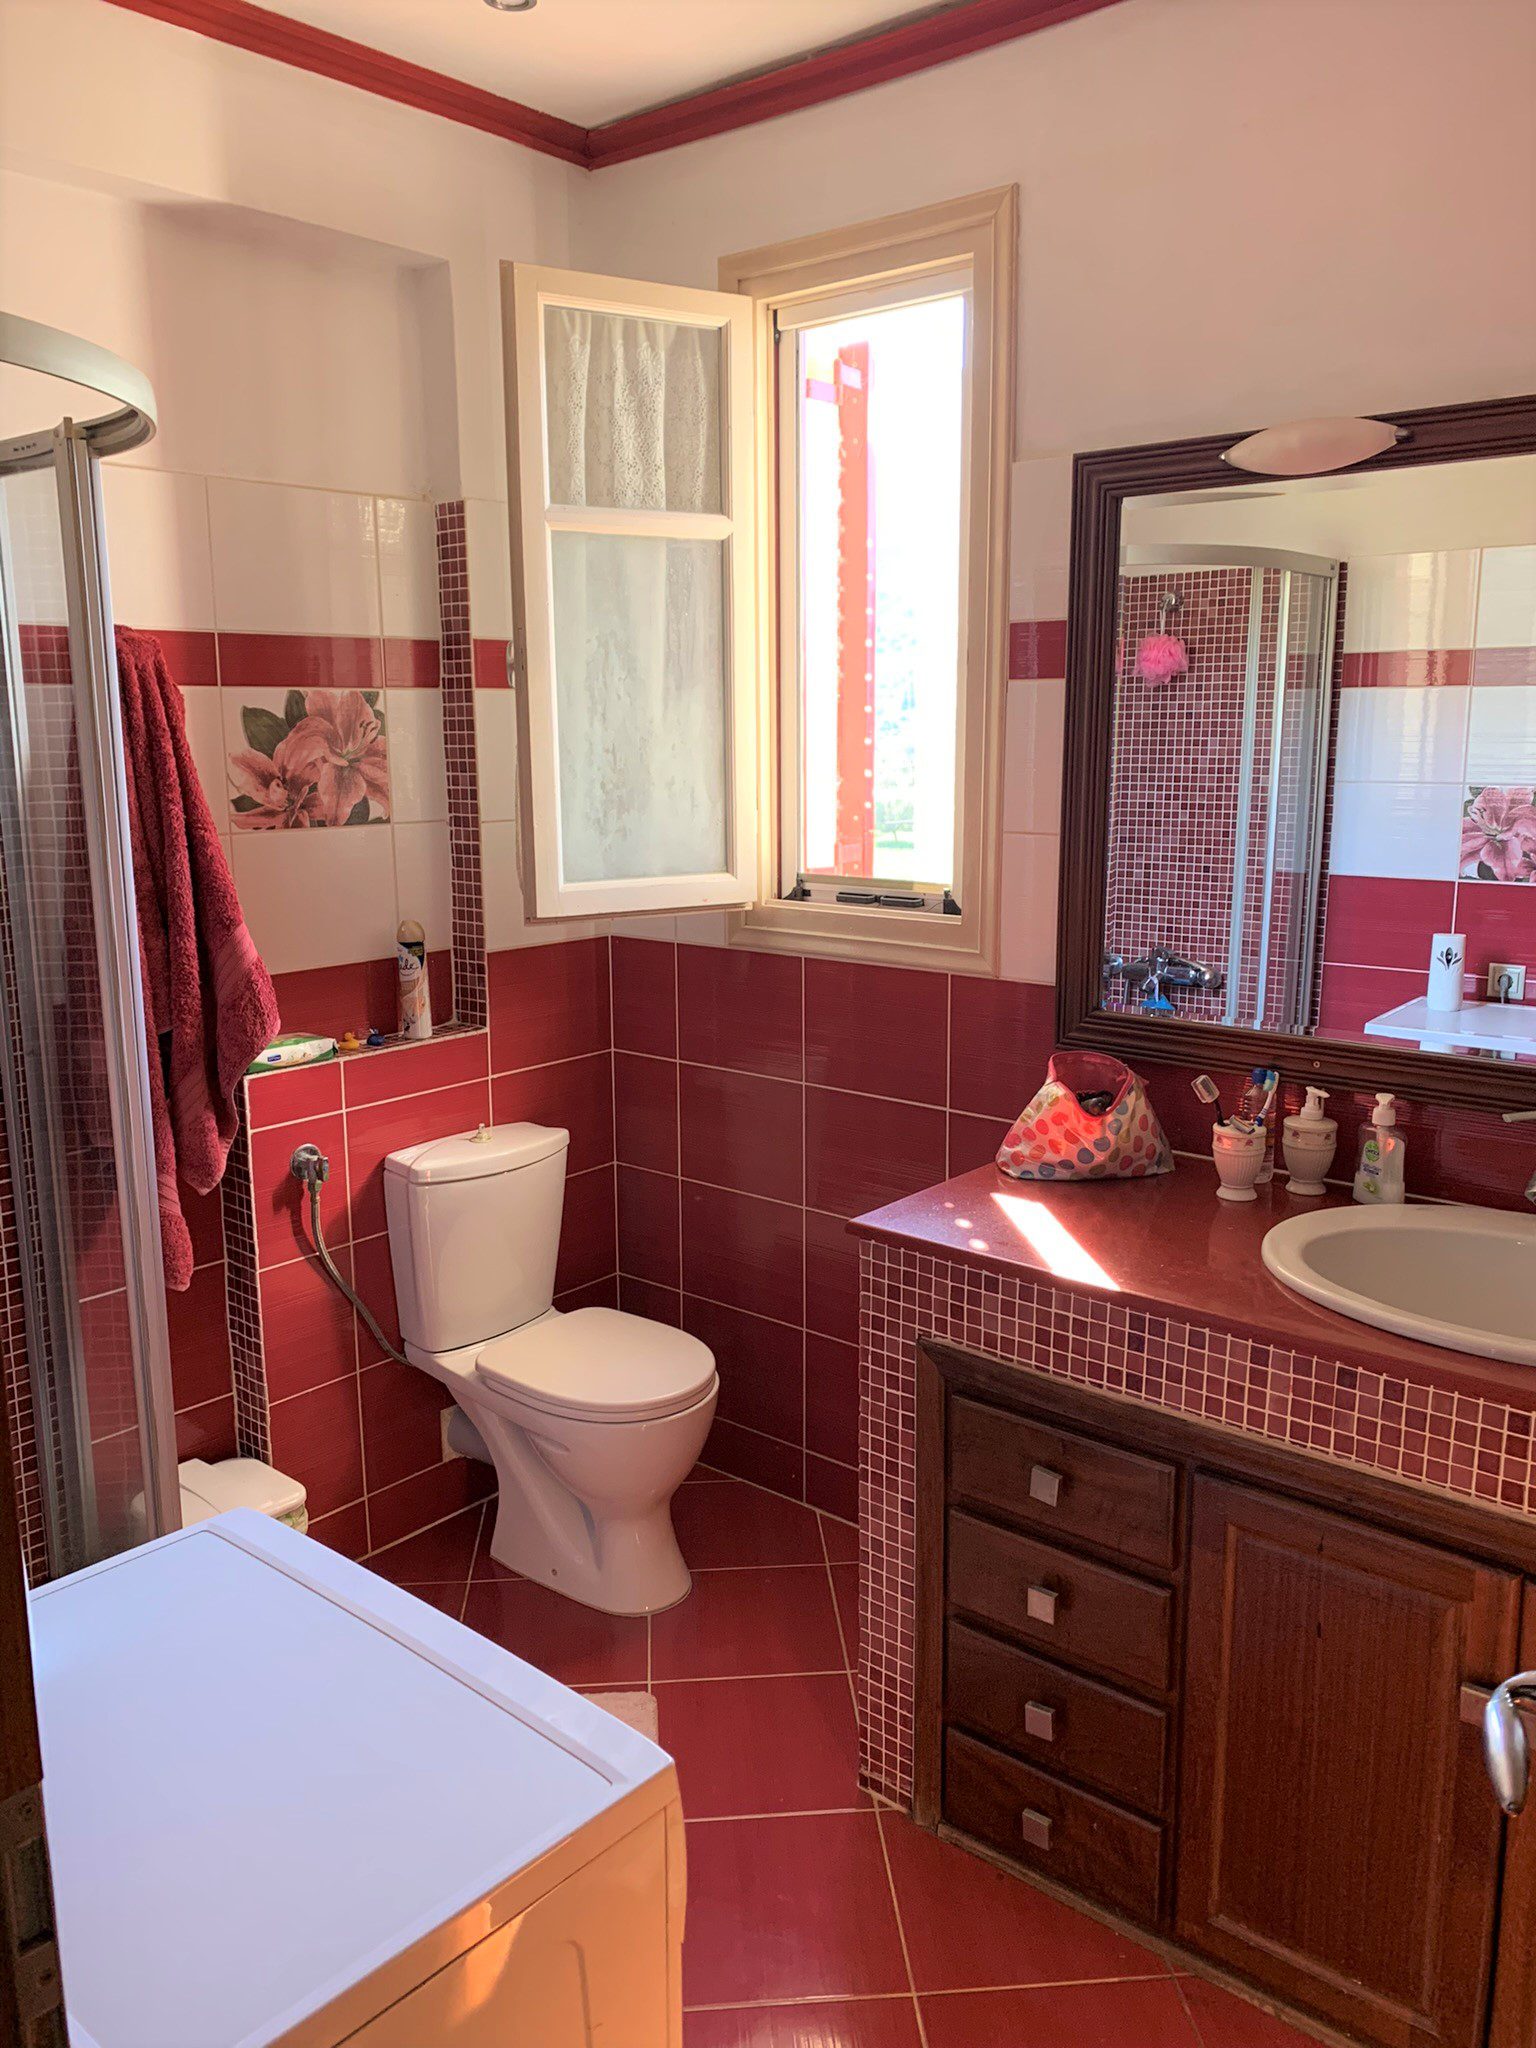 Bathroom of house for sale Ithaca Greece, Vathi